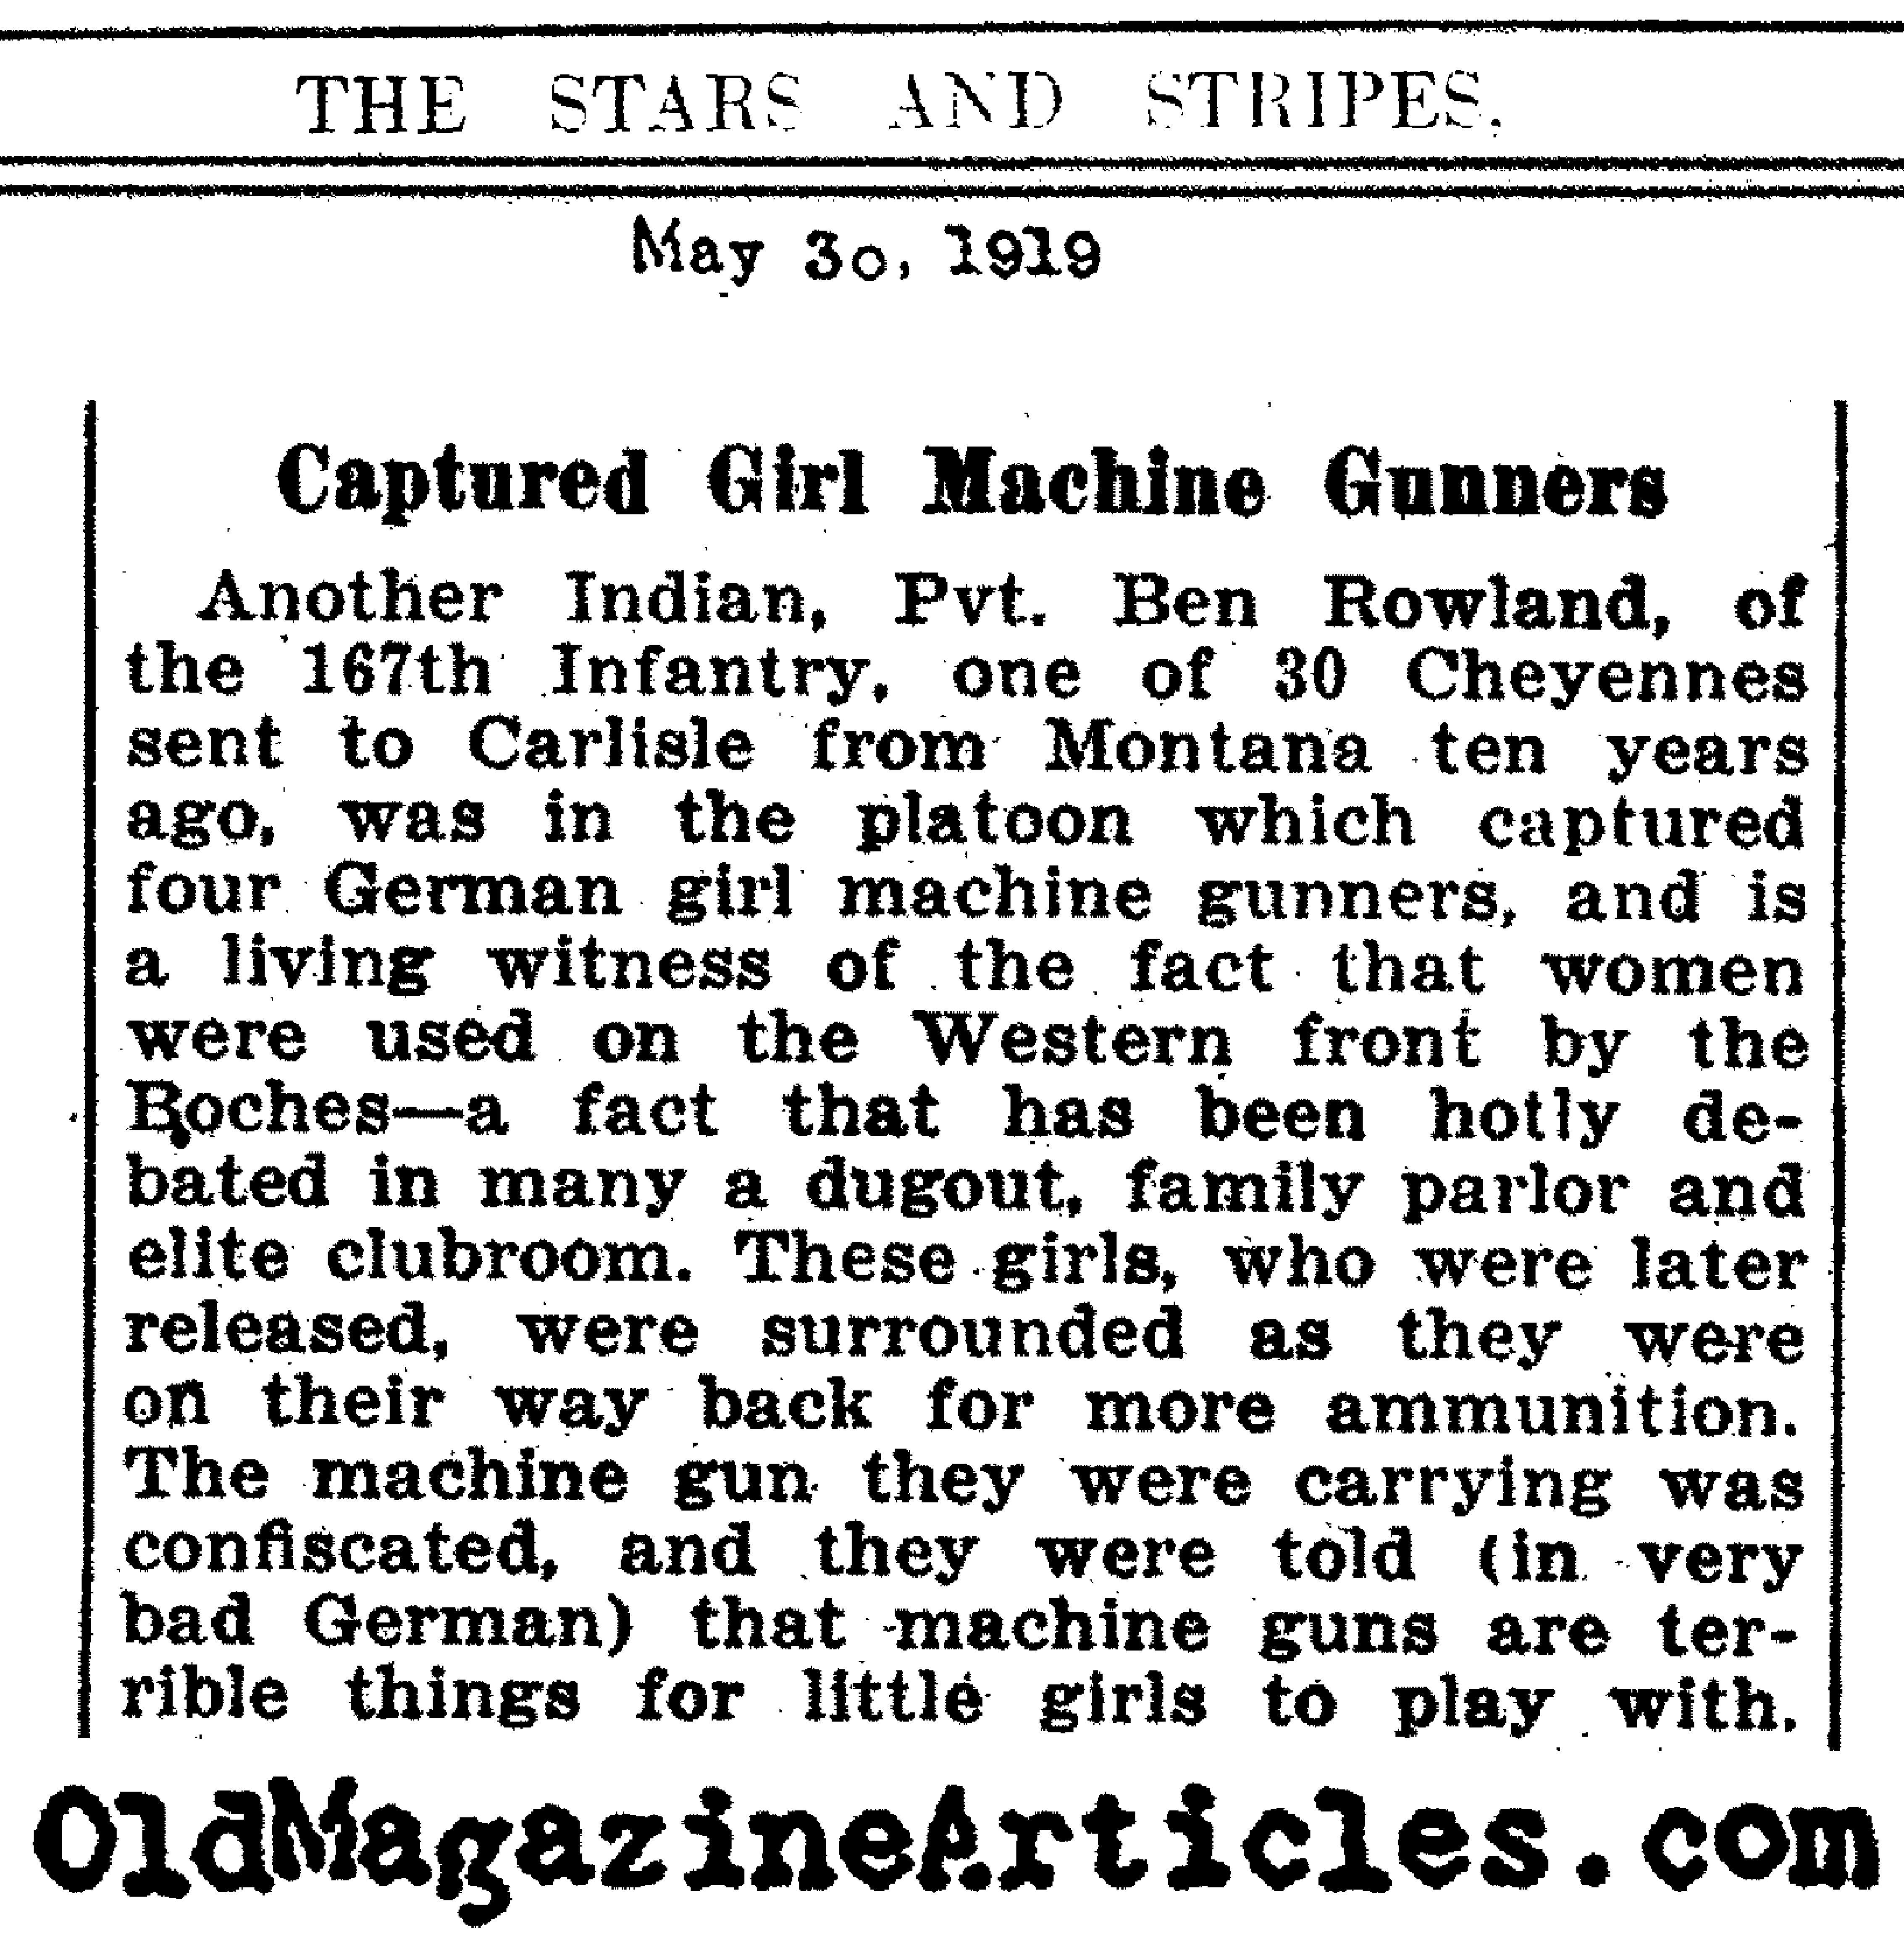 German Girls Captured as Machine Gunners (Stars and Stripes, 1919)